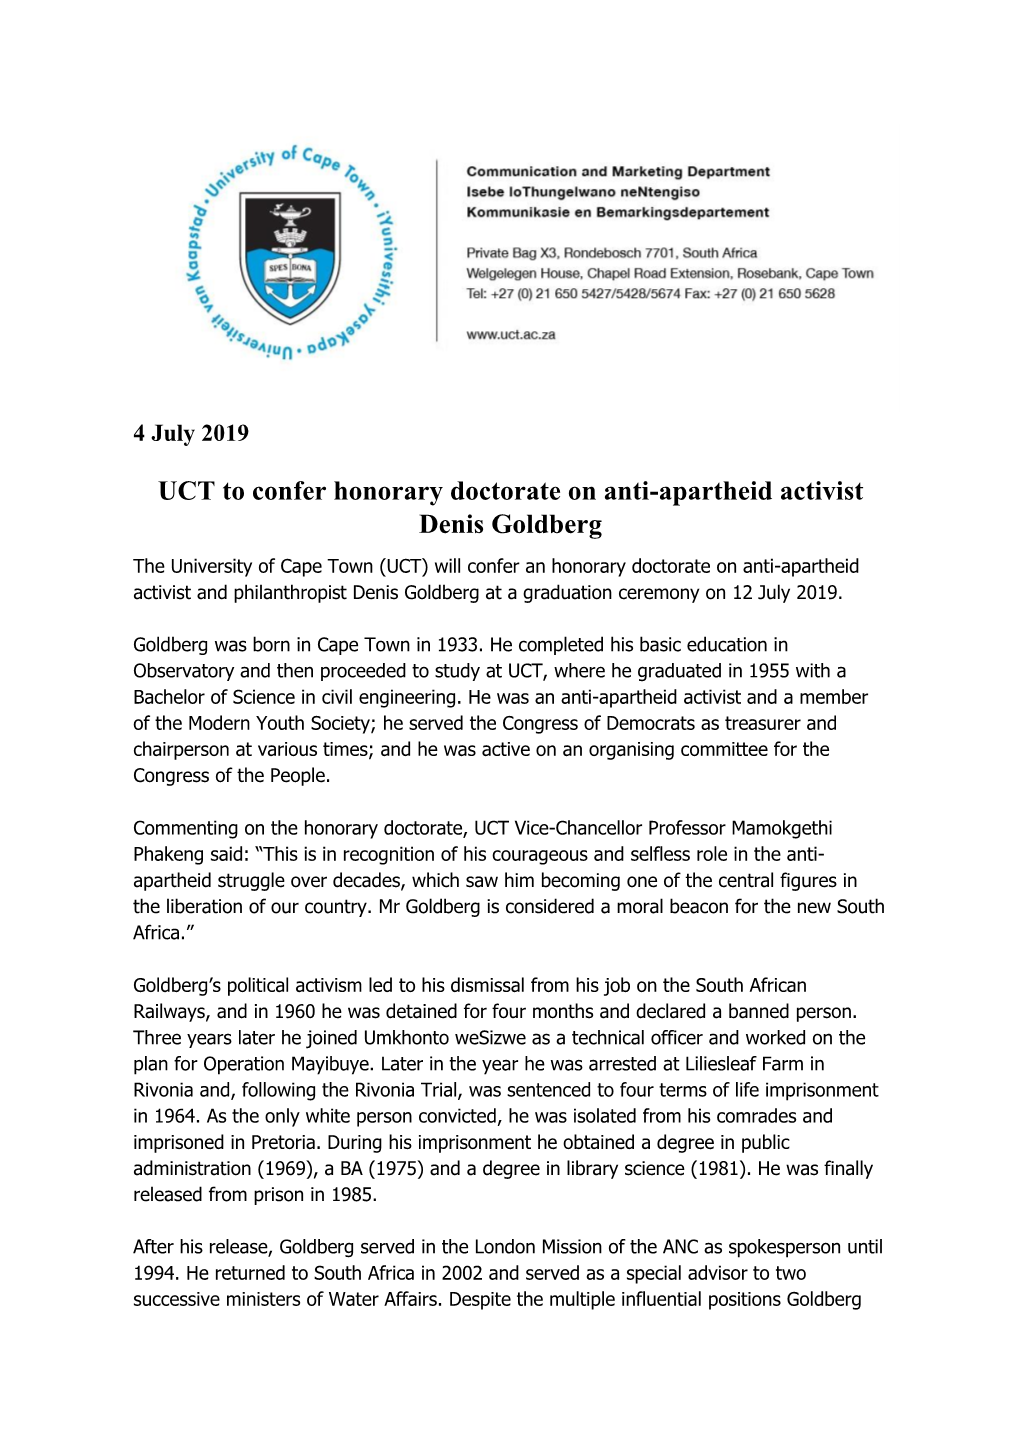 UCT to Confer Honorary Doctorate on Anti-Apartheid Activist Denis Goldberg